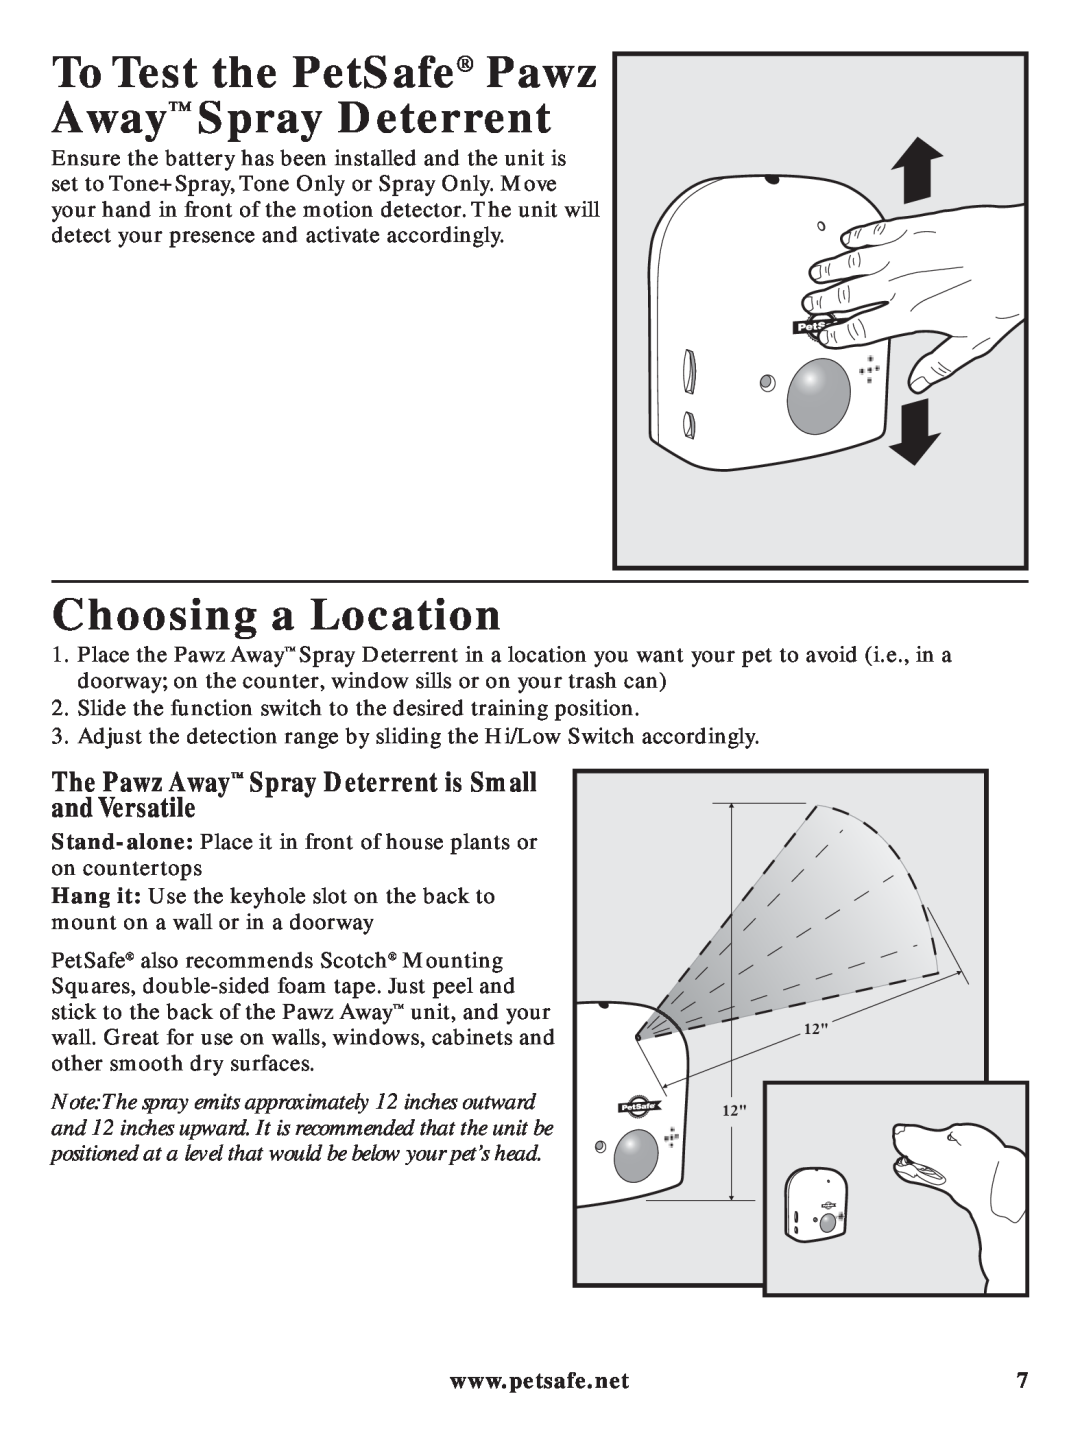 Petsafe PDT00-11312 manual To Test the PetSafe Pawz Away Spray Deterrent, Choosing a Location 